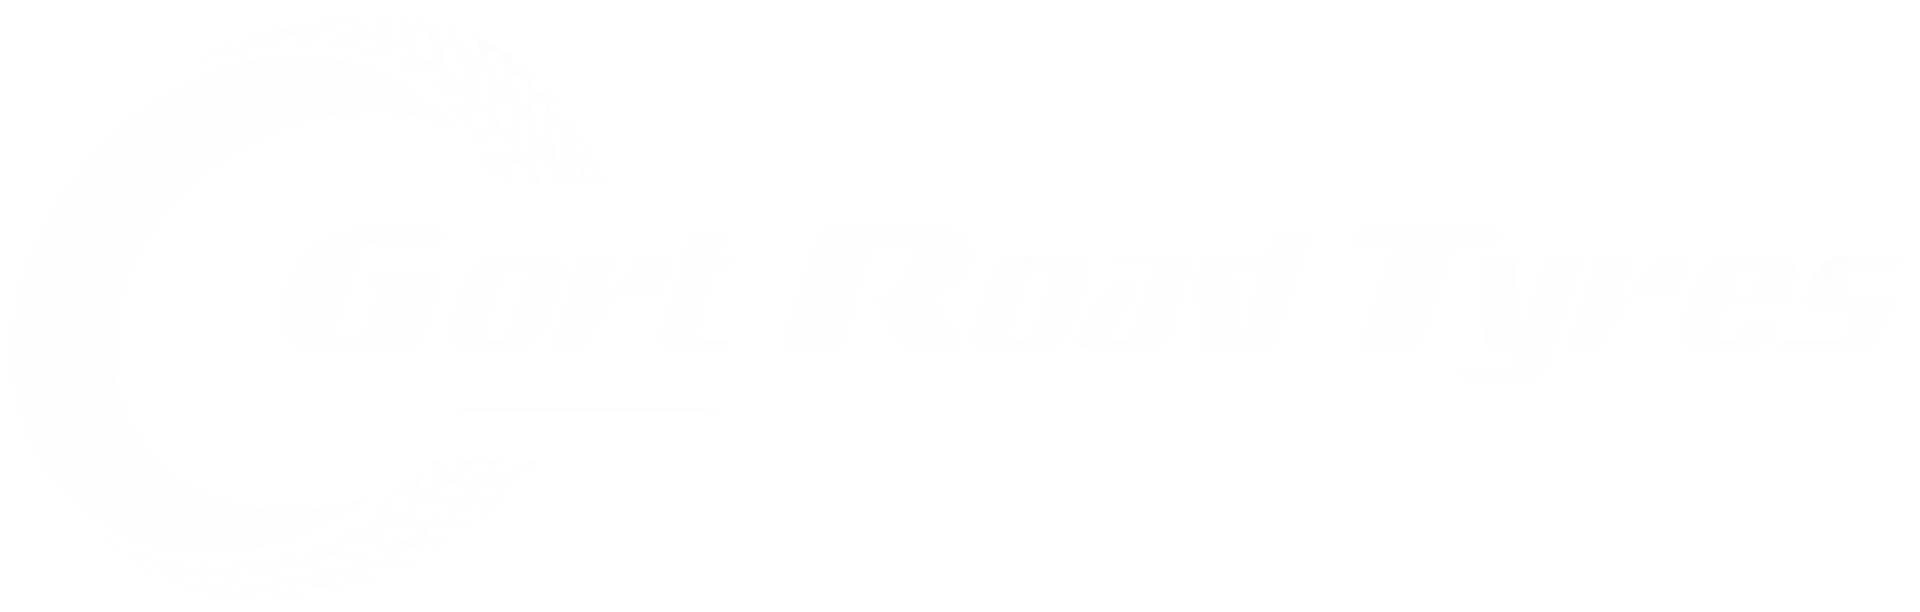 Gort Road Tyres Logo